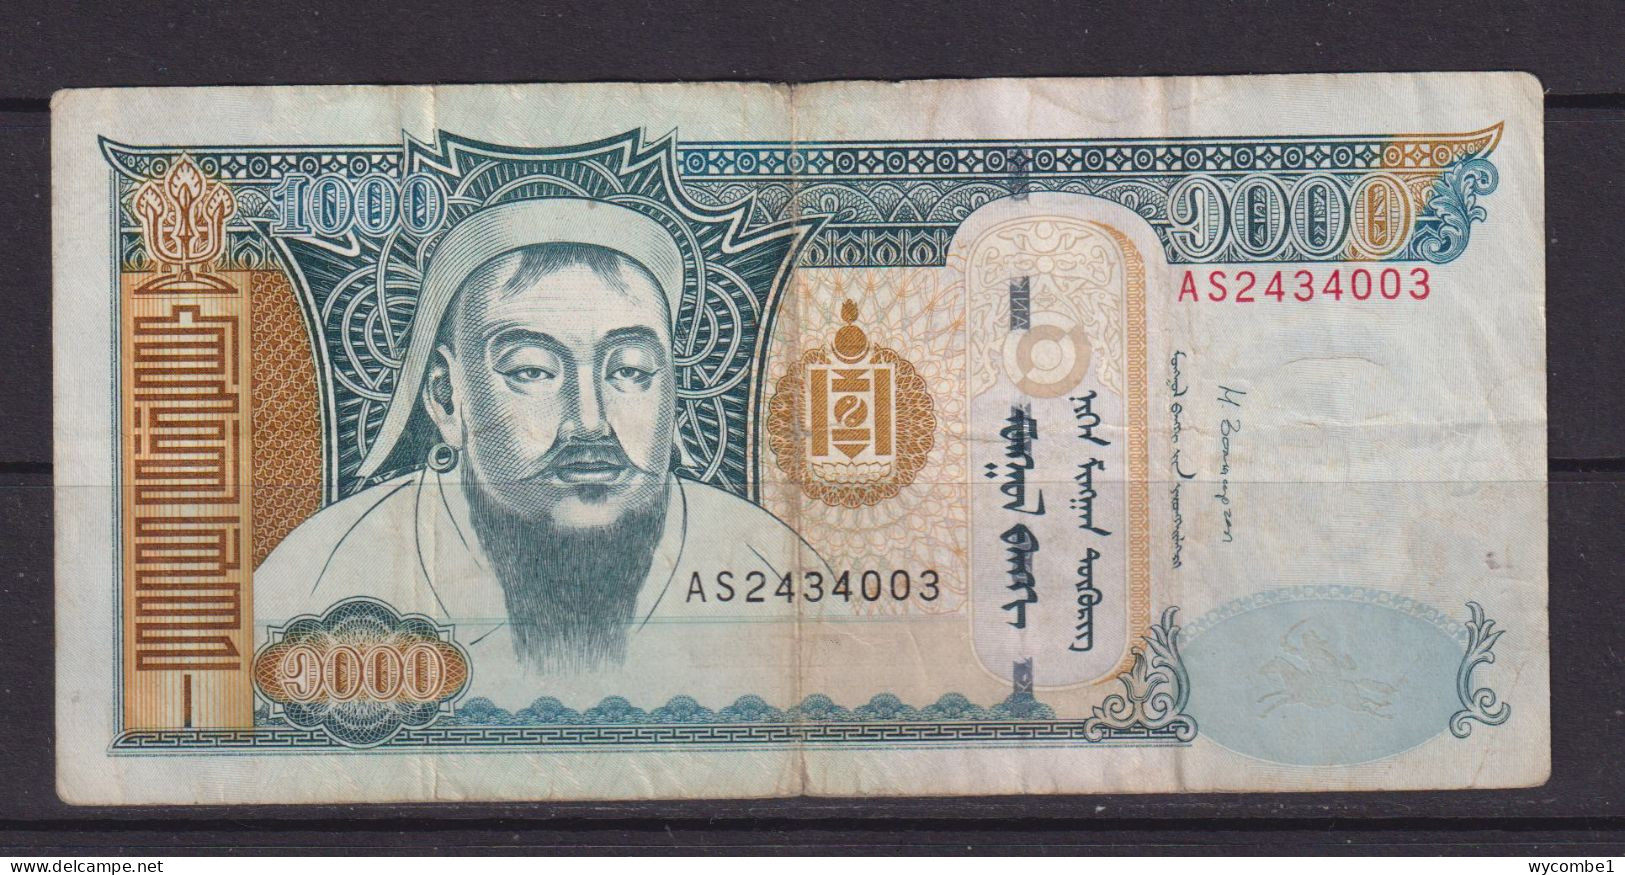 MONGOLIA - 2013 1000 Tugrik Circulated Banknote - Mongolie